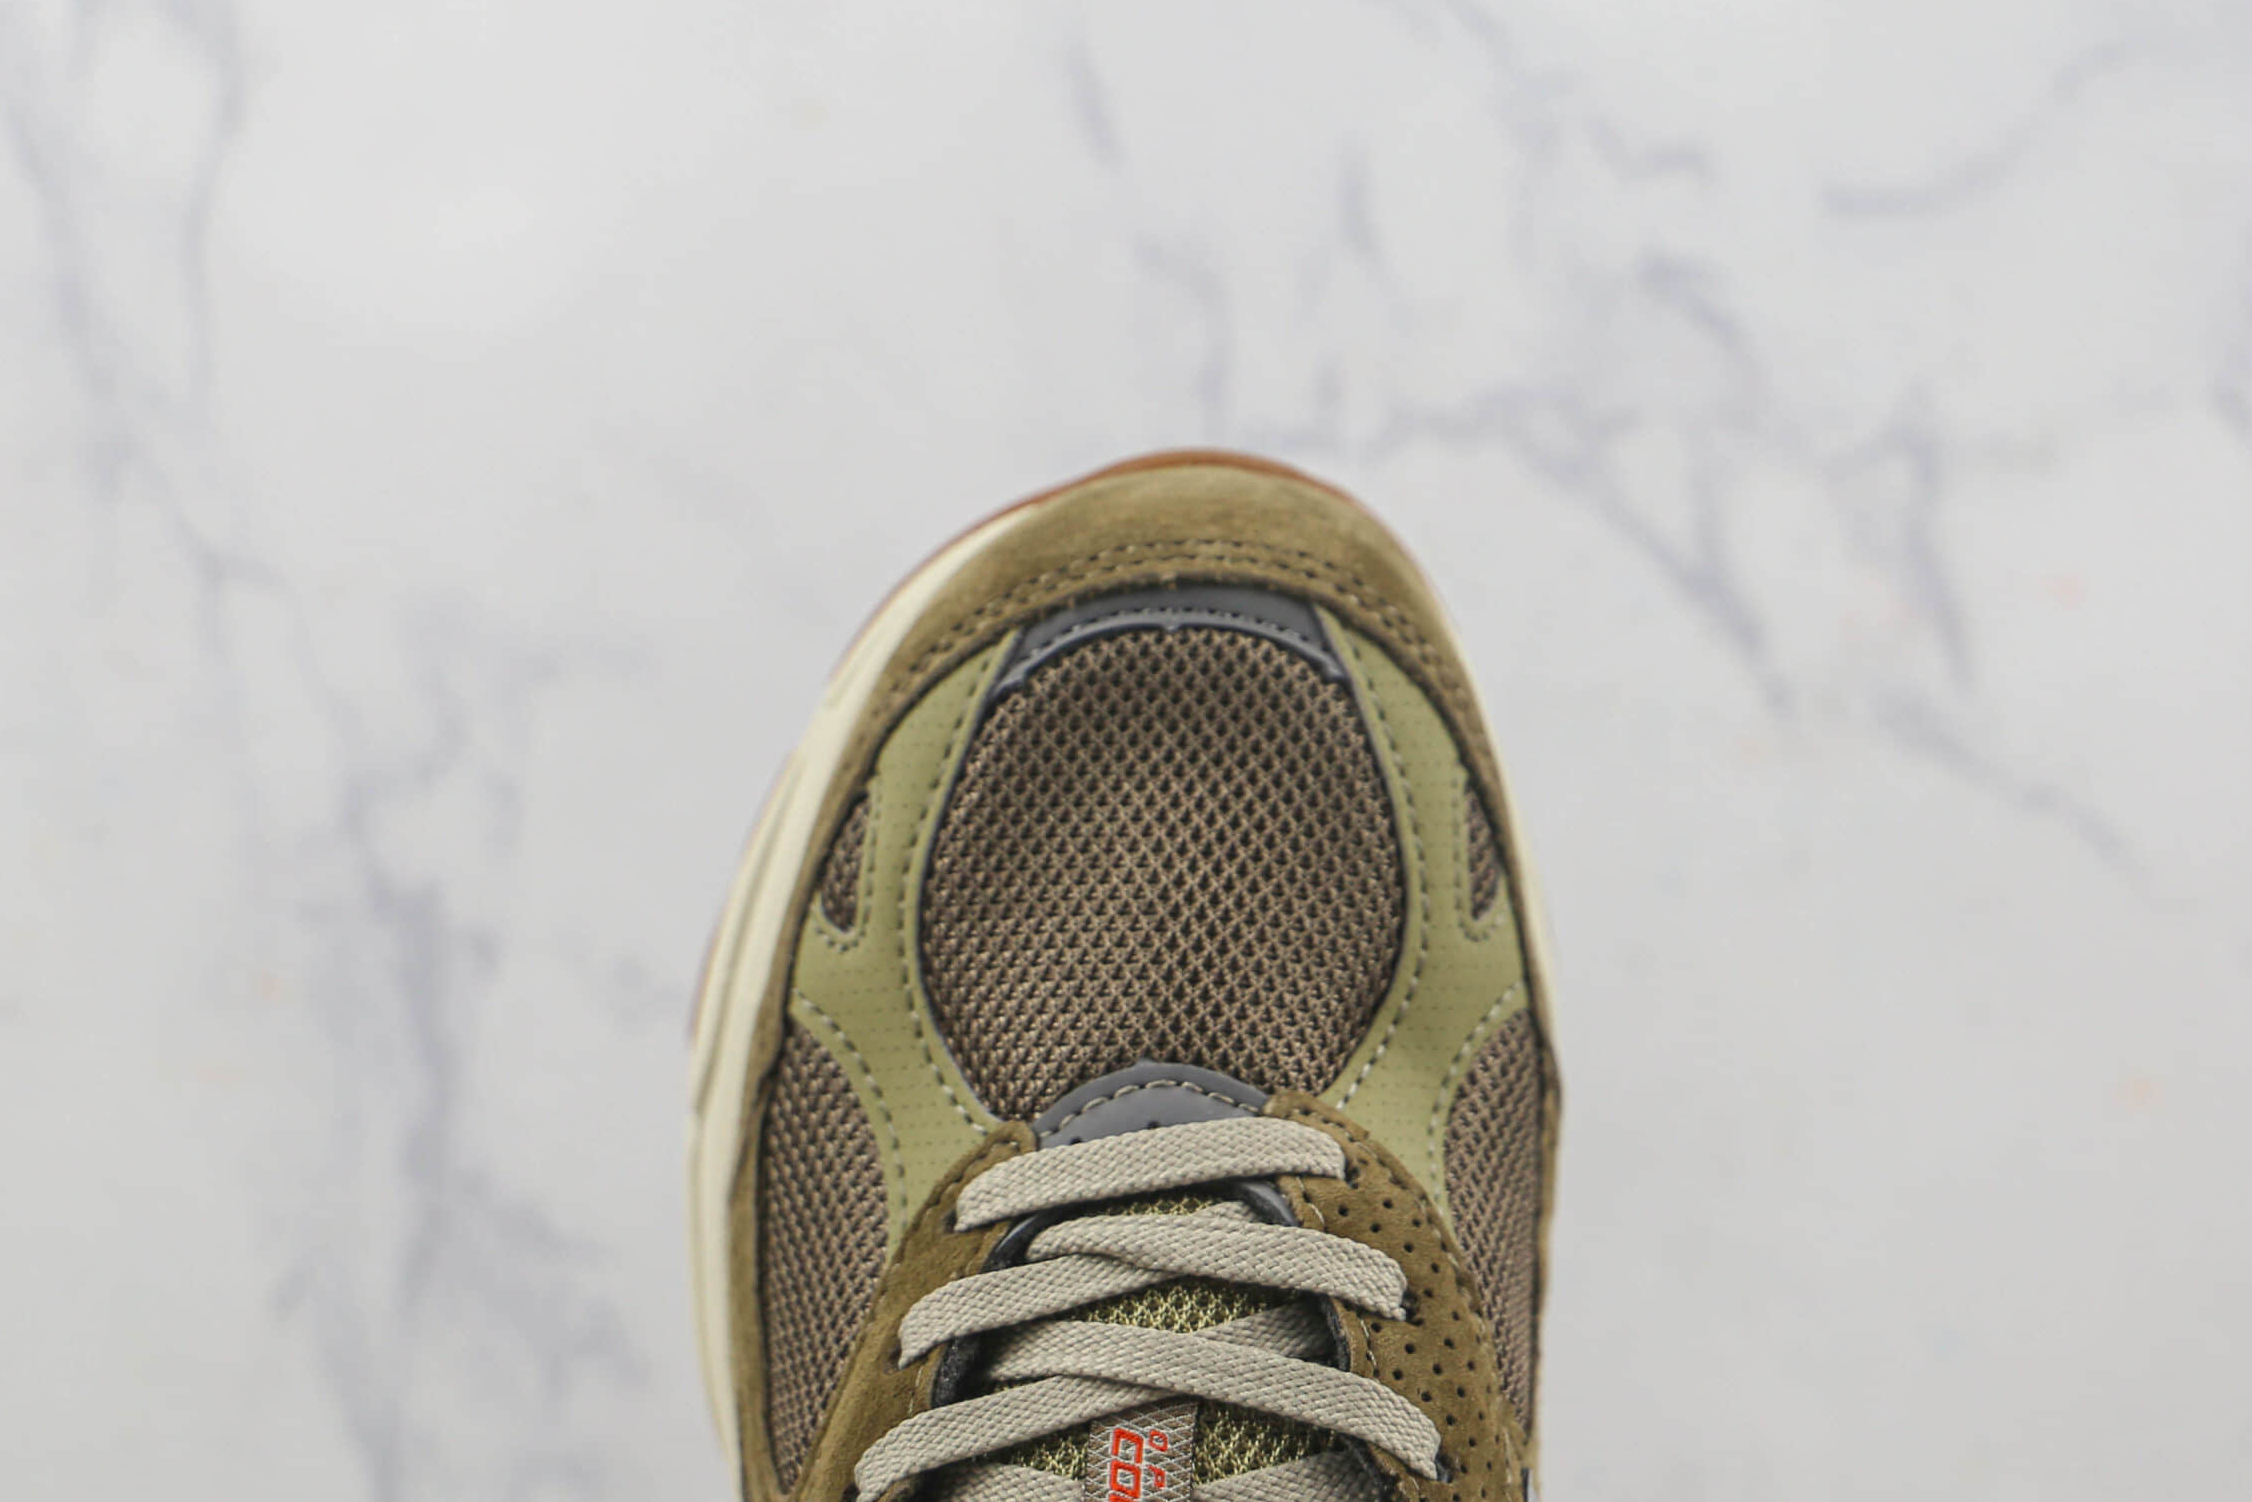 New Balance Bodega x 990v3 'Anniversary' M990BD3 - Limited Edition Sneakers